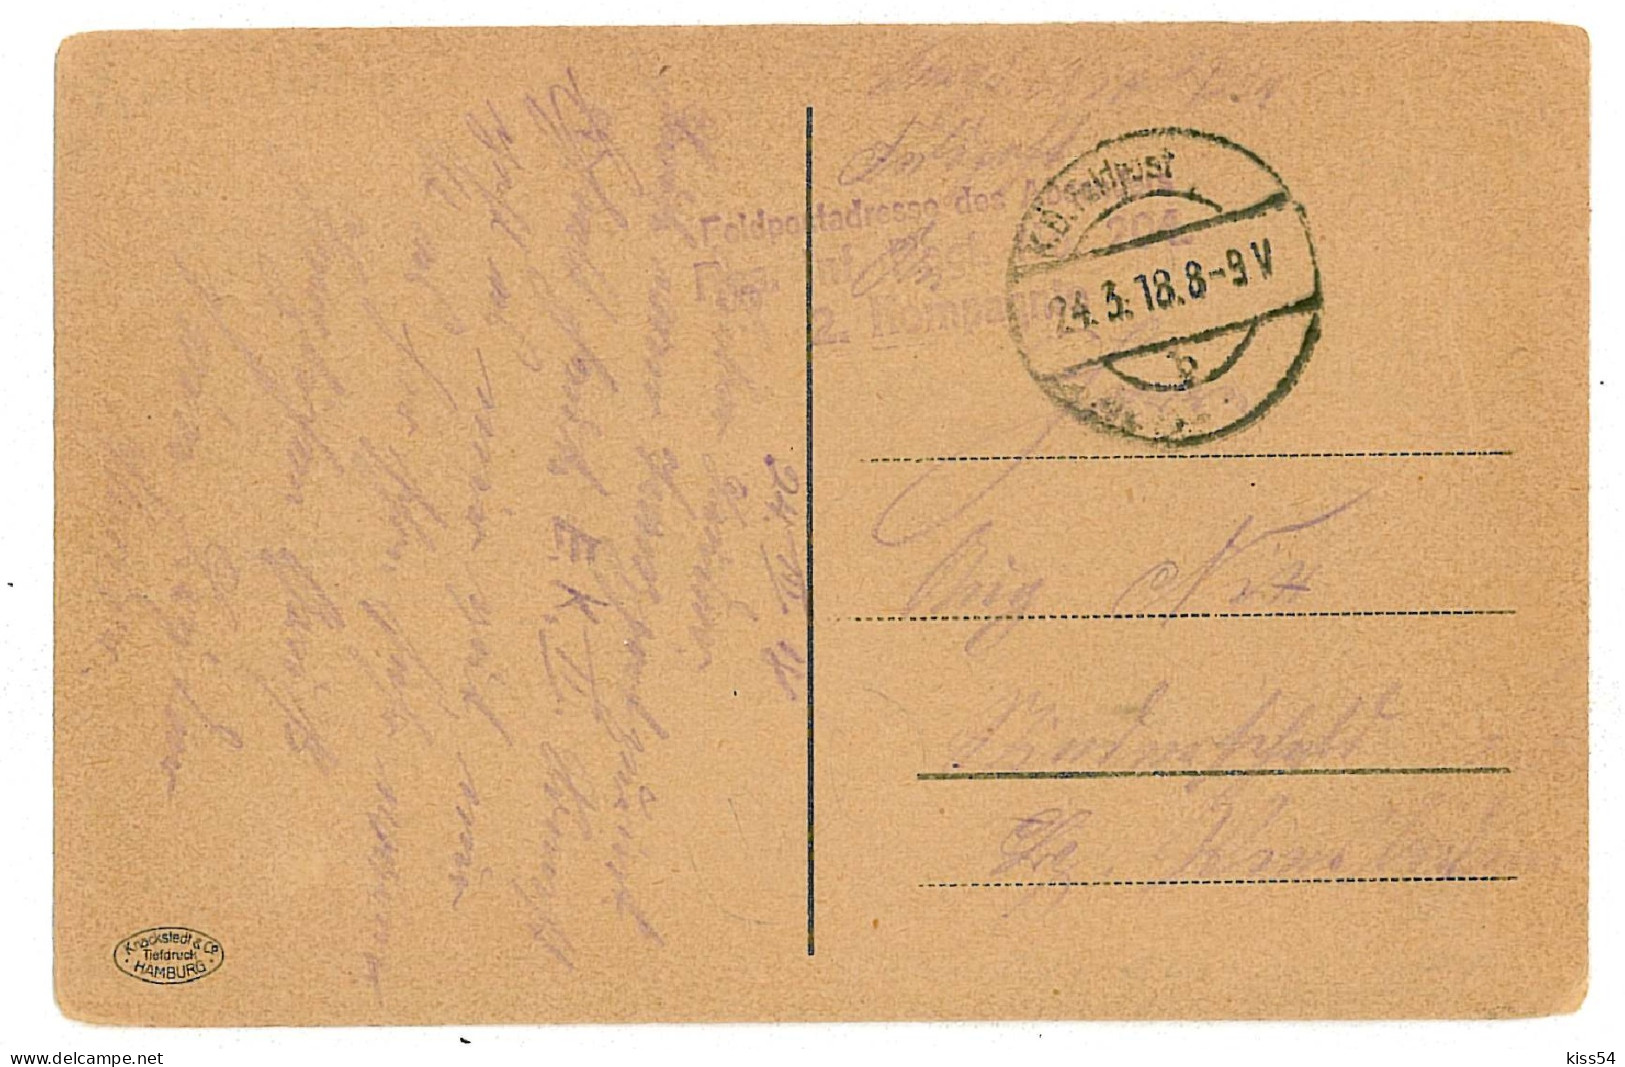 RO 40 - 1271 GALATI, Centrul, Caruta Si Trasuri, Romania - Old Postcard, CENSOR - Used - 1918 - Roemenië